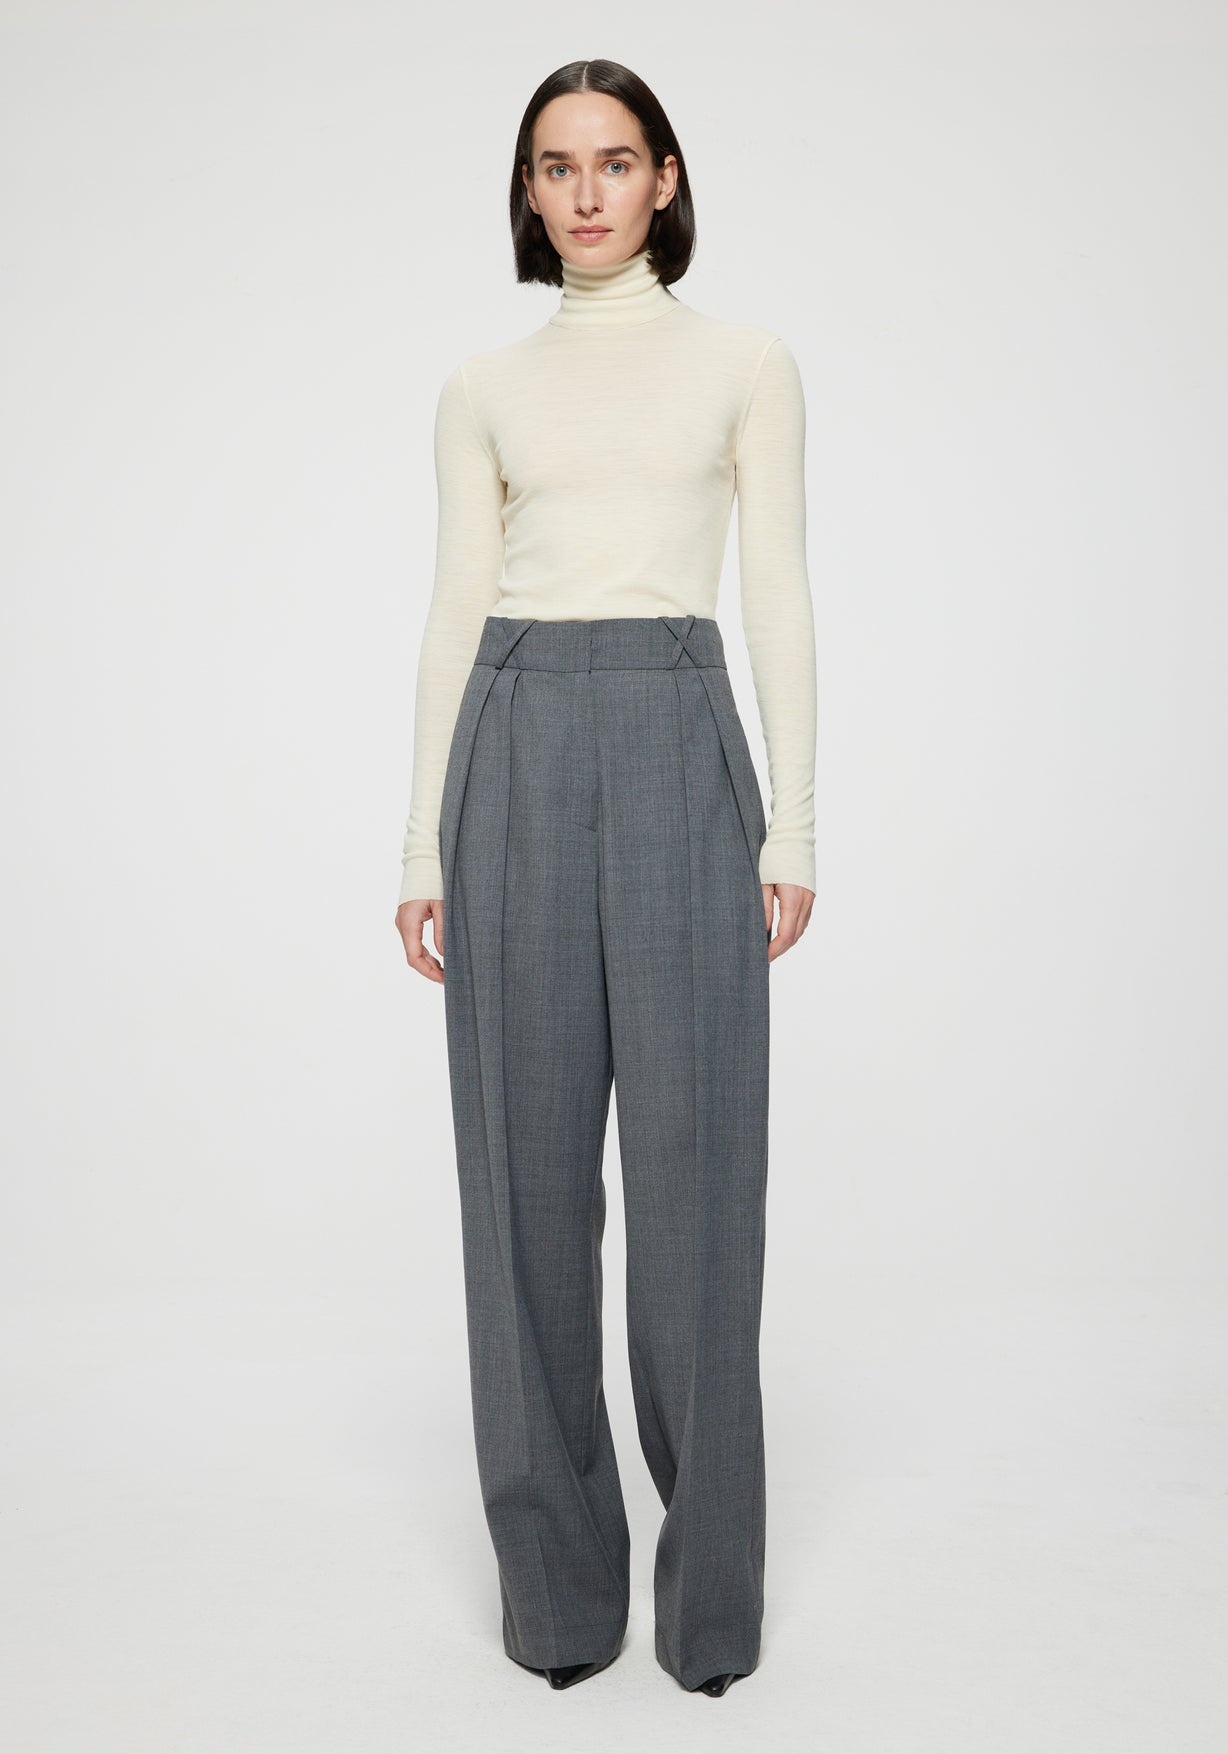 Women's high-waisted pants in gray melange wool blend